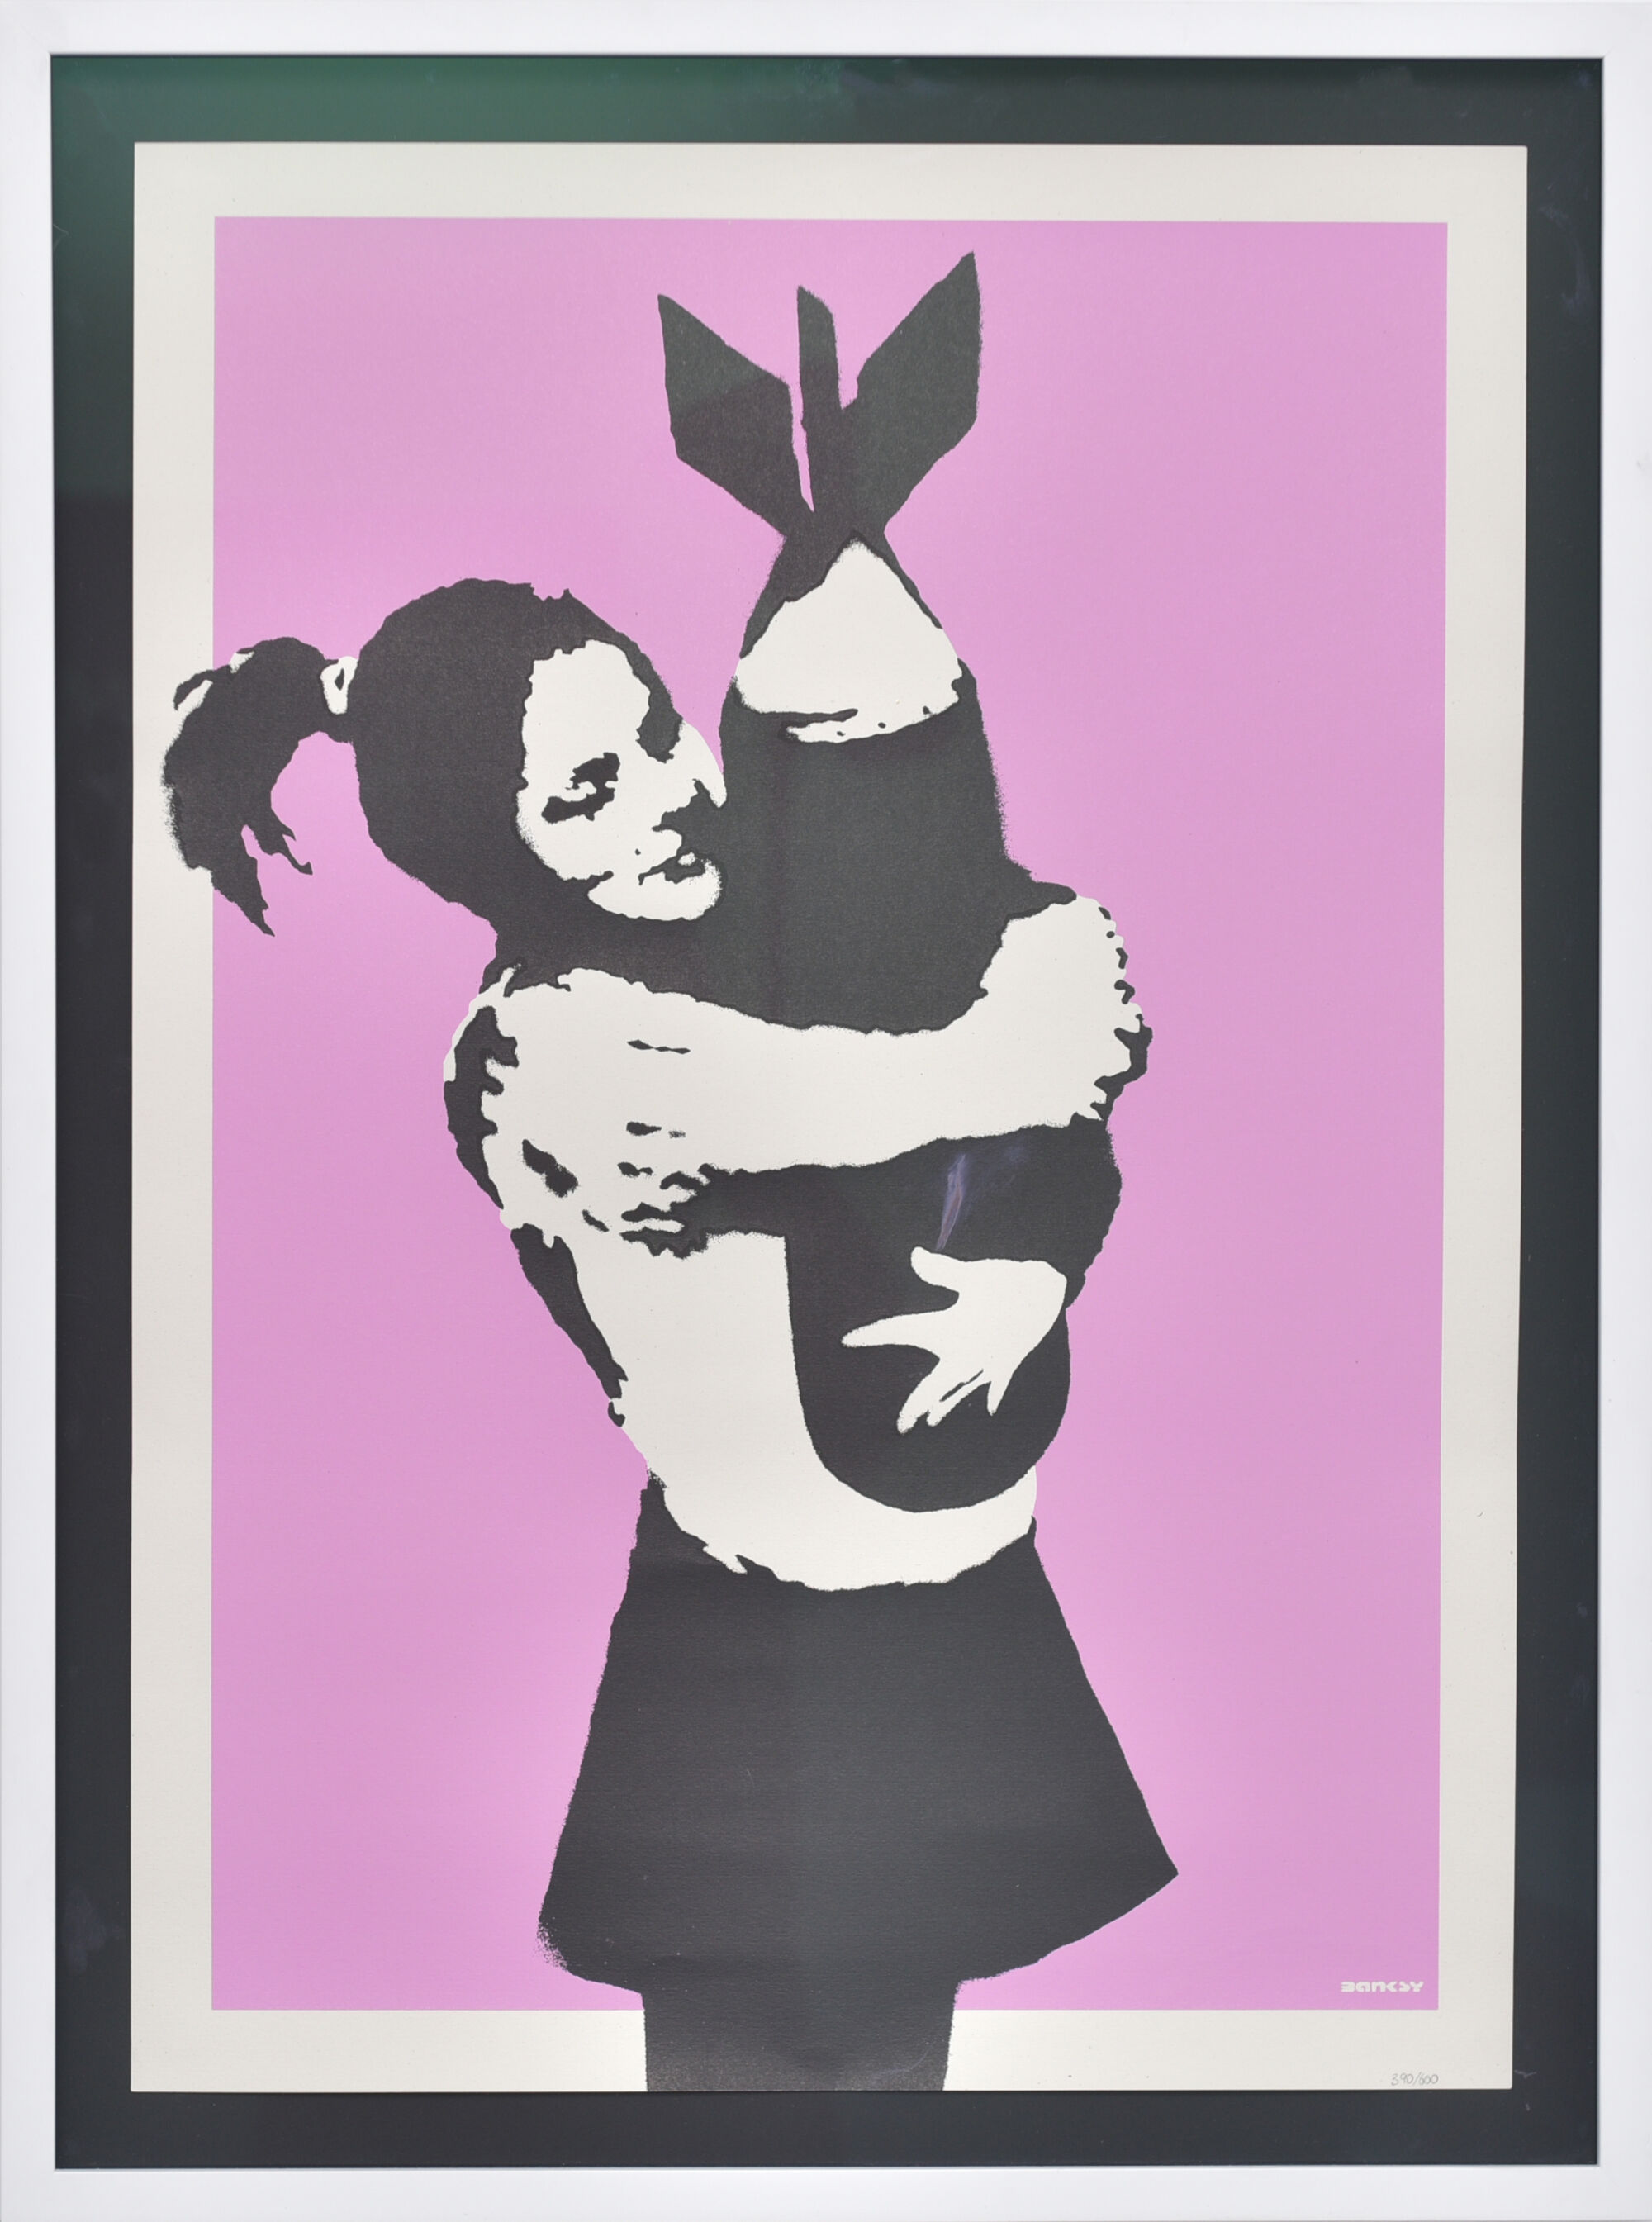 The Wick - Banksy, Bomb Hugger, 2003